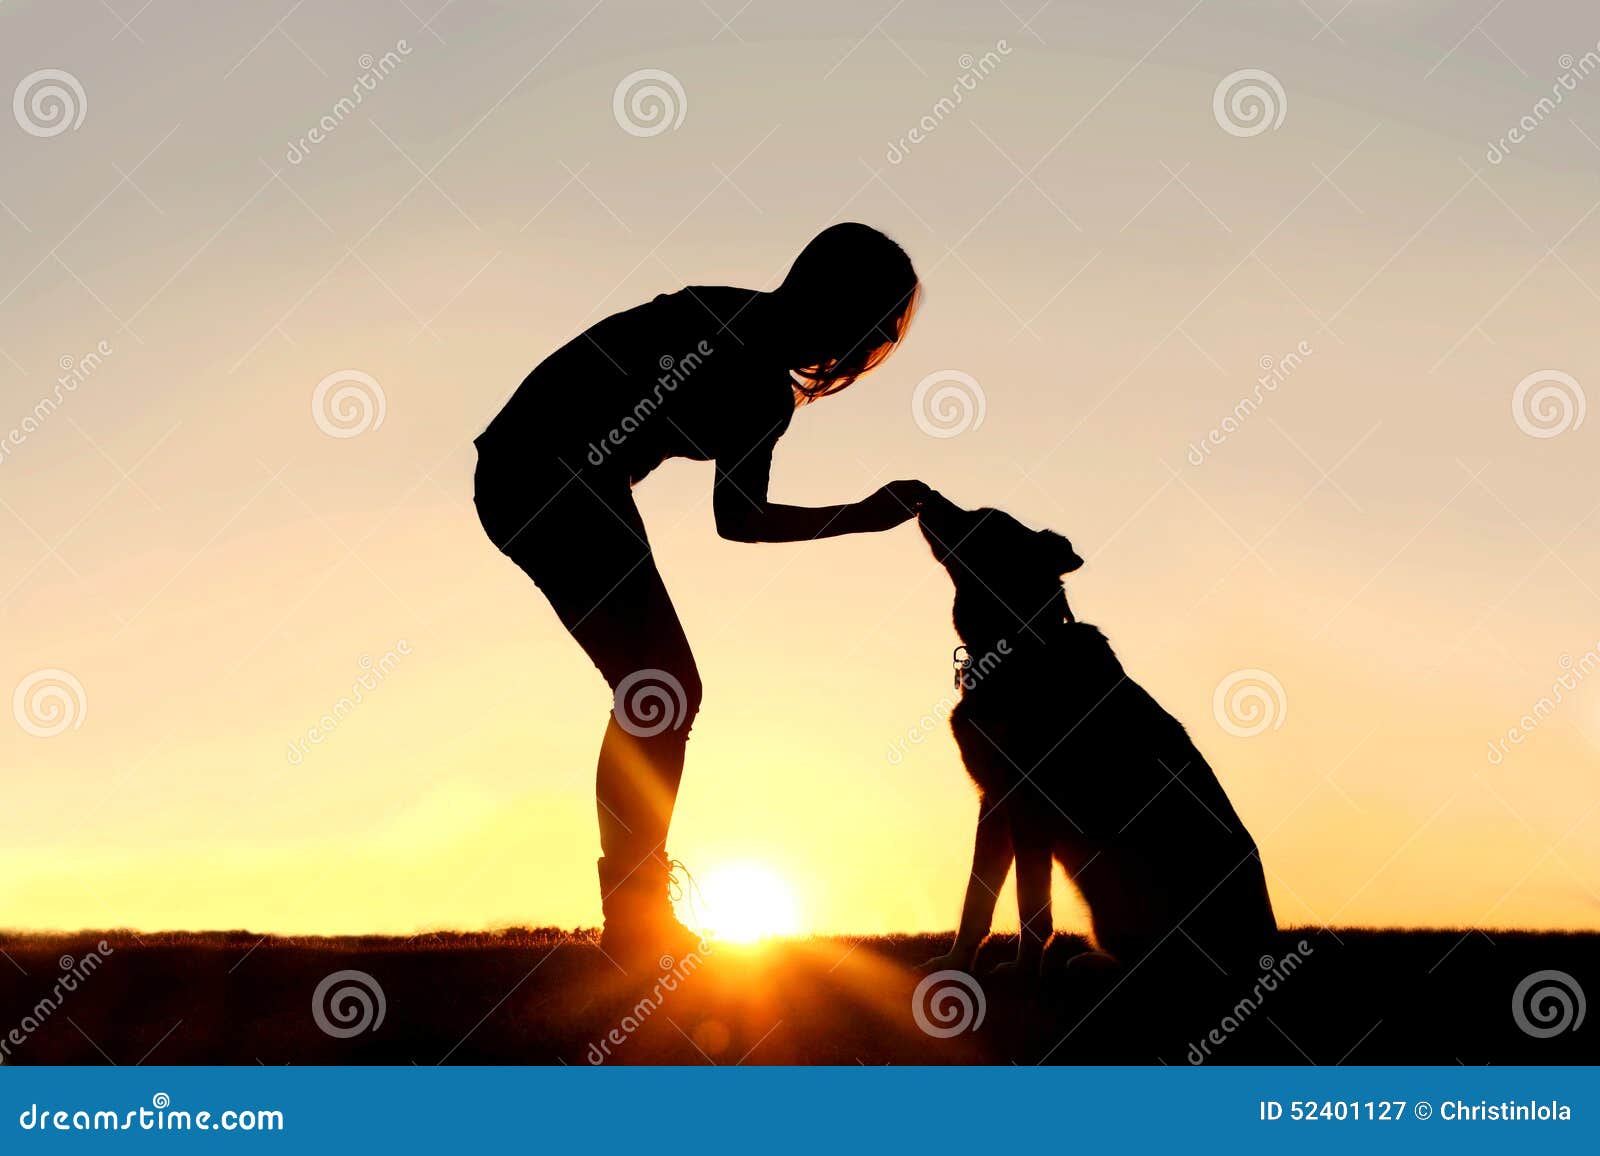 woman feeding pet dog treats silhouette